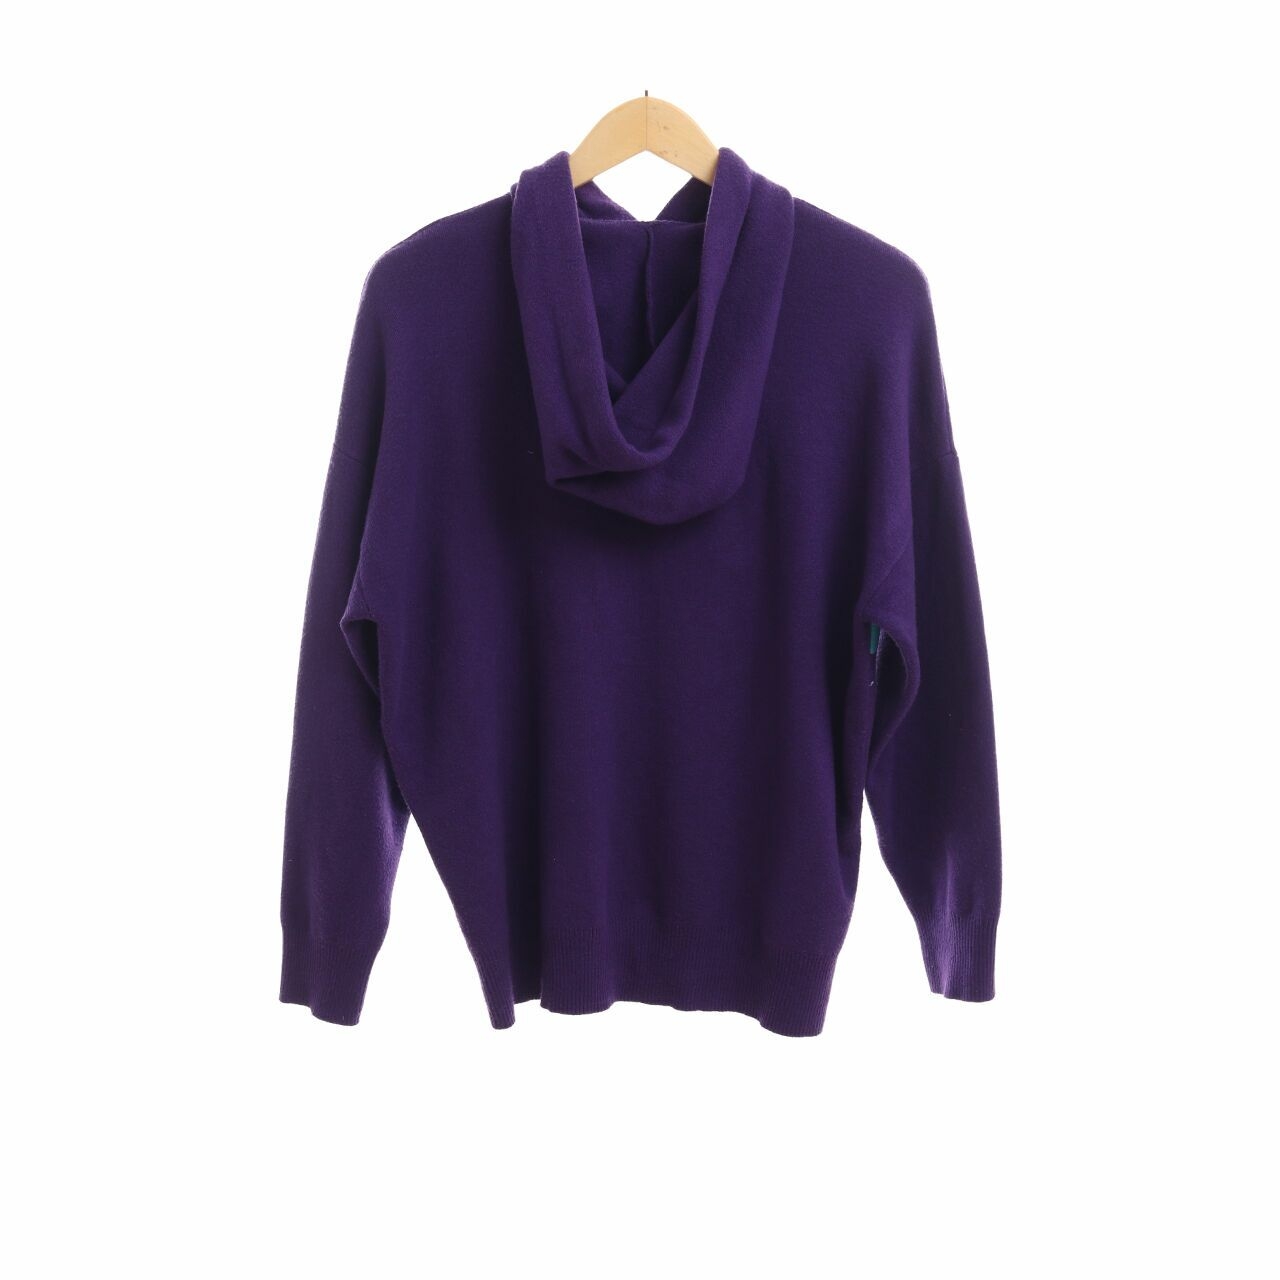 Zara Green/Purple Stripes Hoodie Sweater